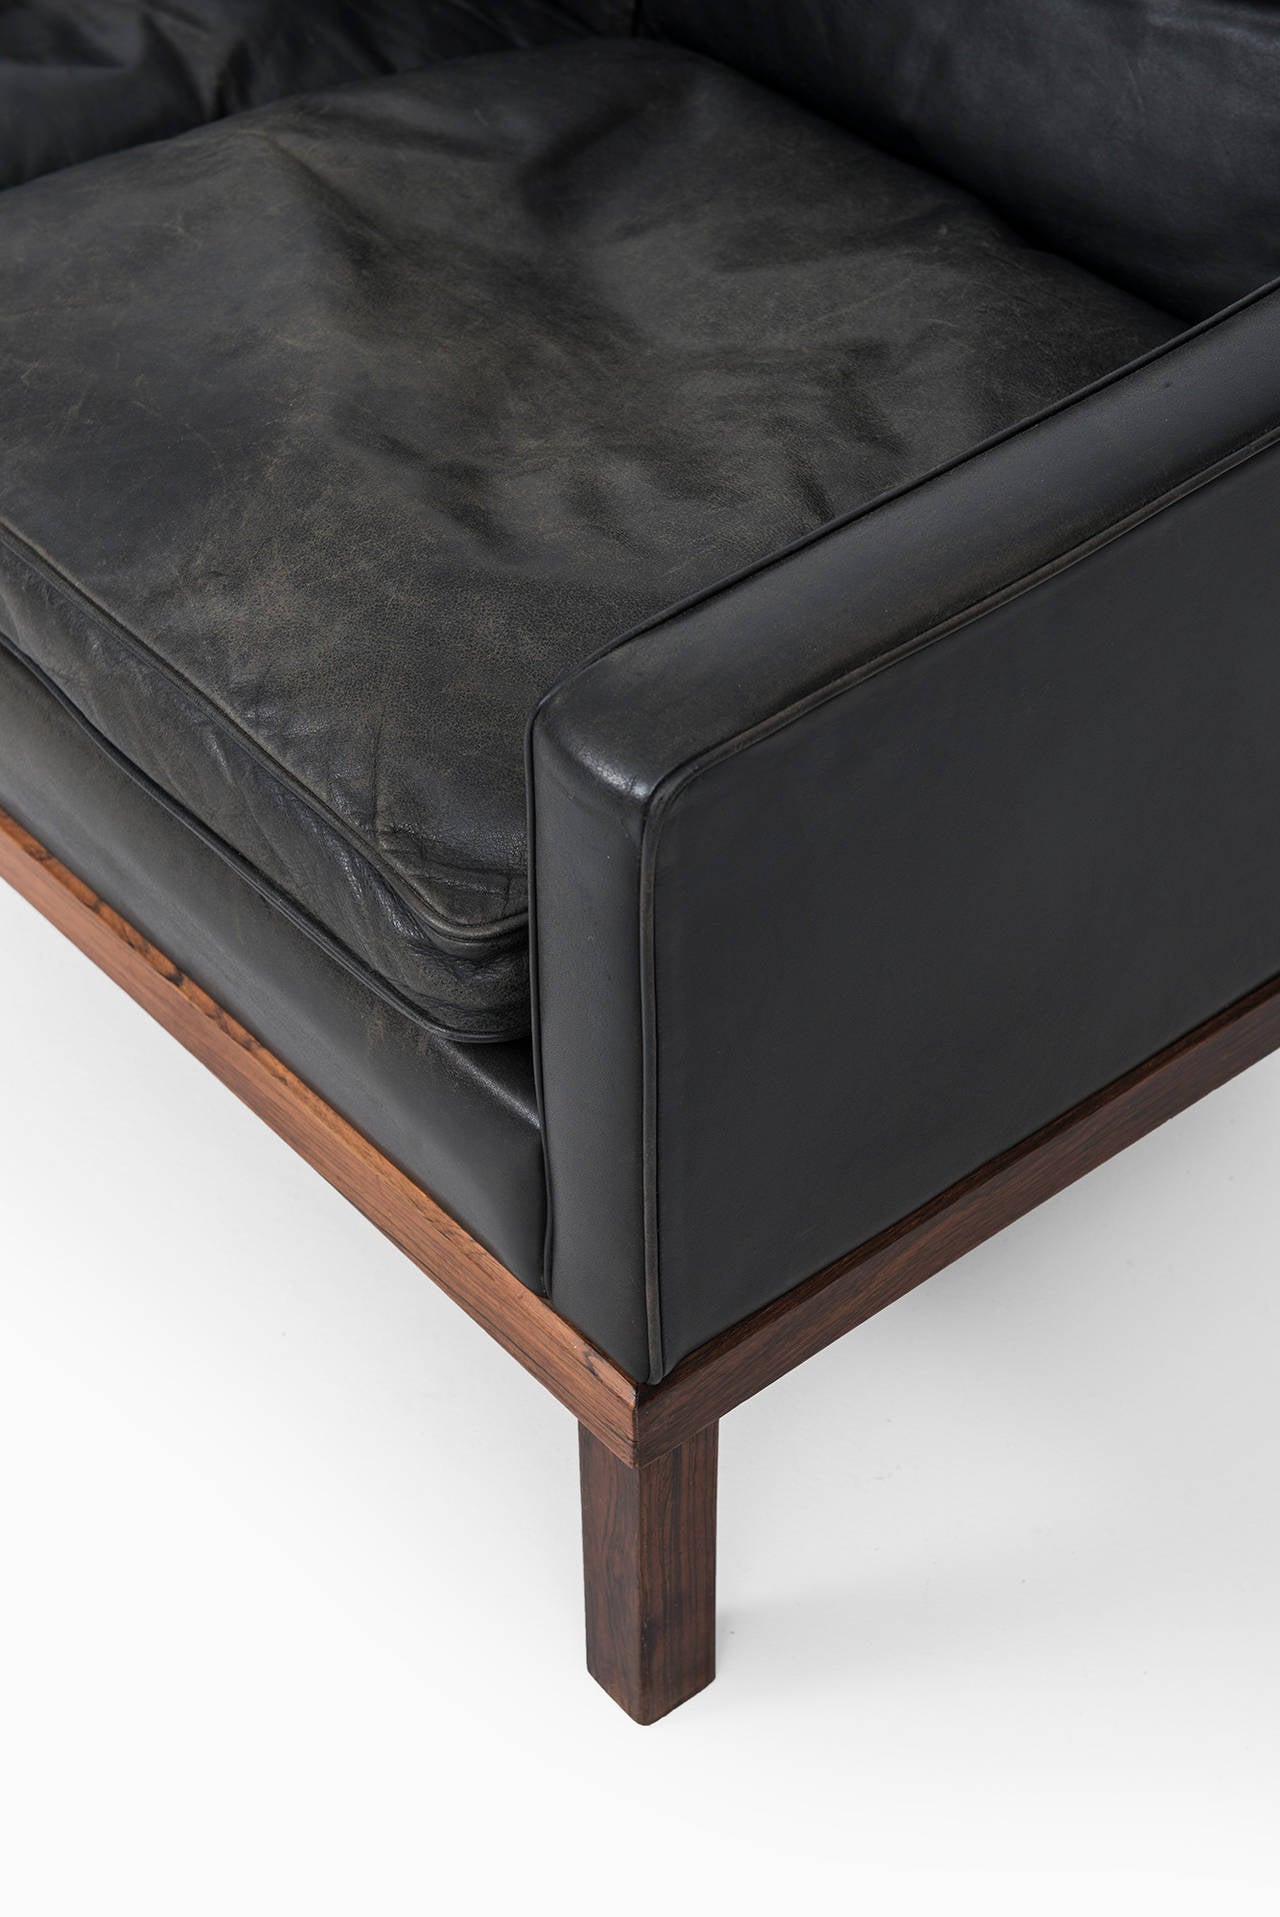 Swedish Ib Kofod-Larsen leather sofa by OPE in Sweden